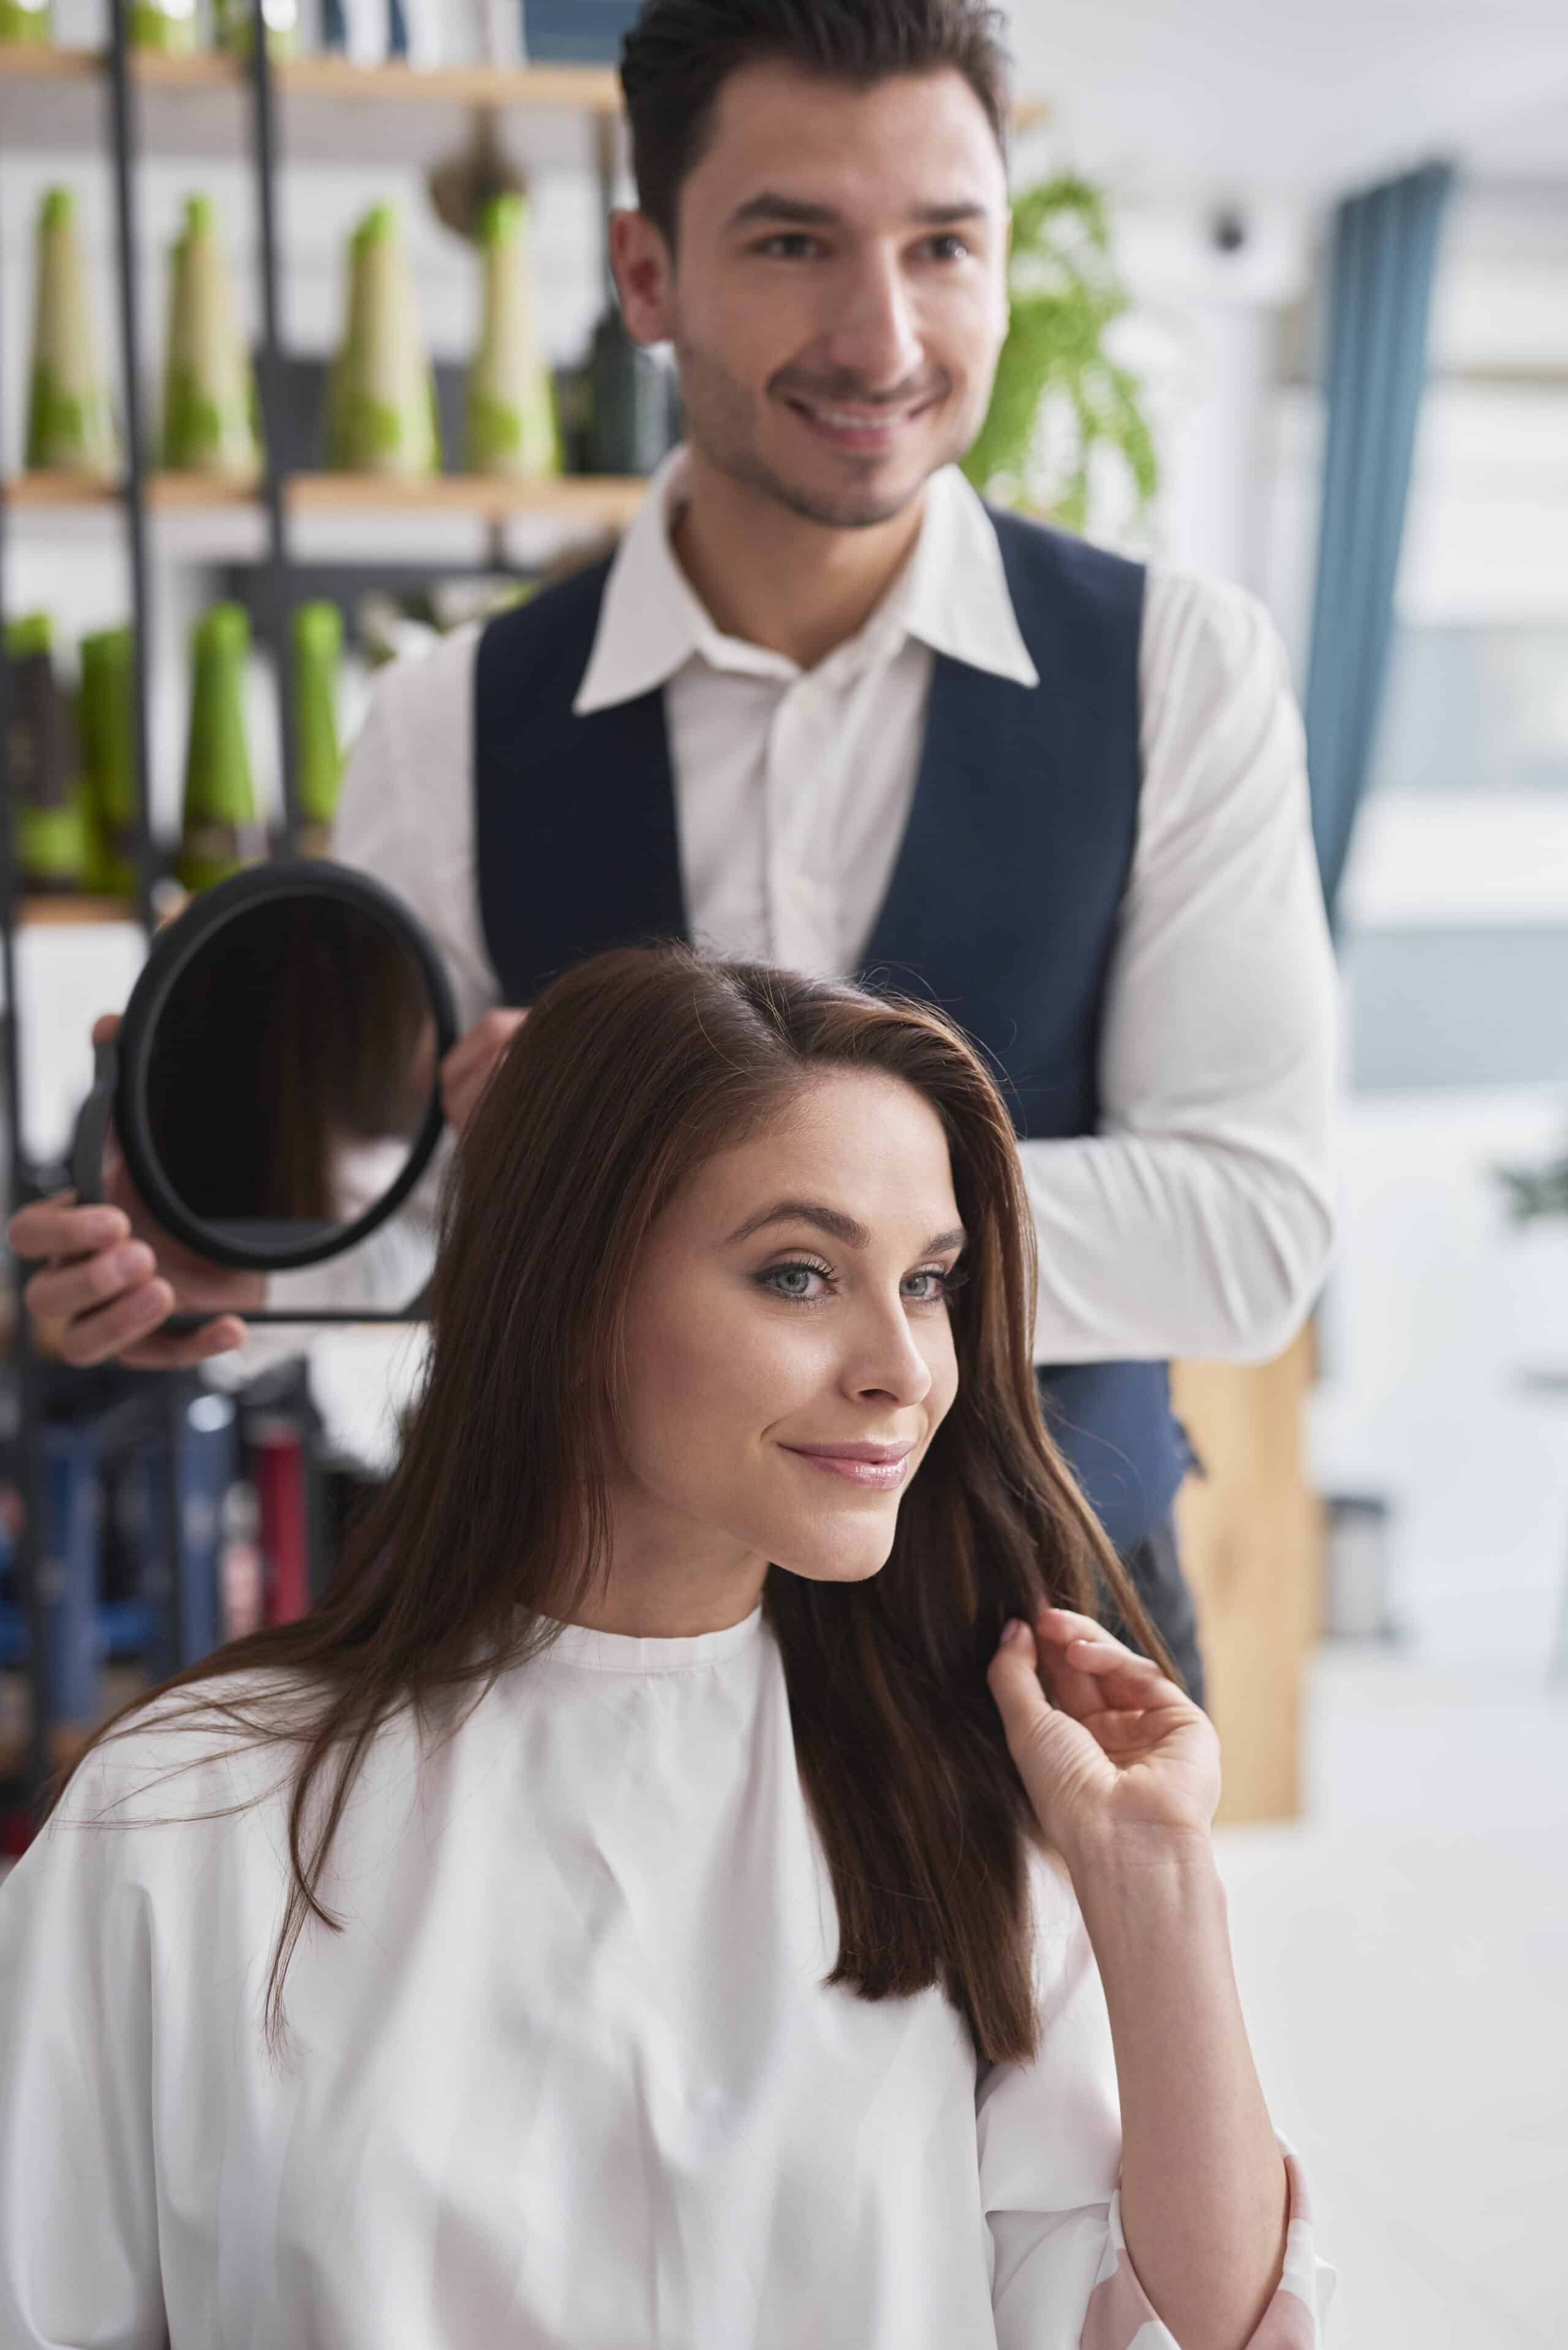 Hairdresser and female customer in hair salon